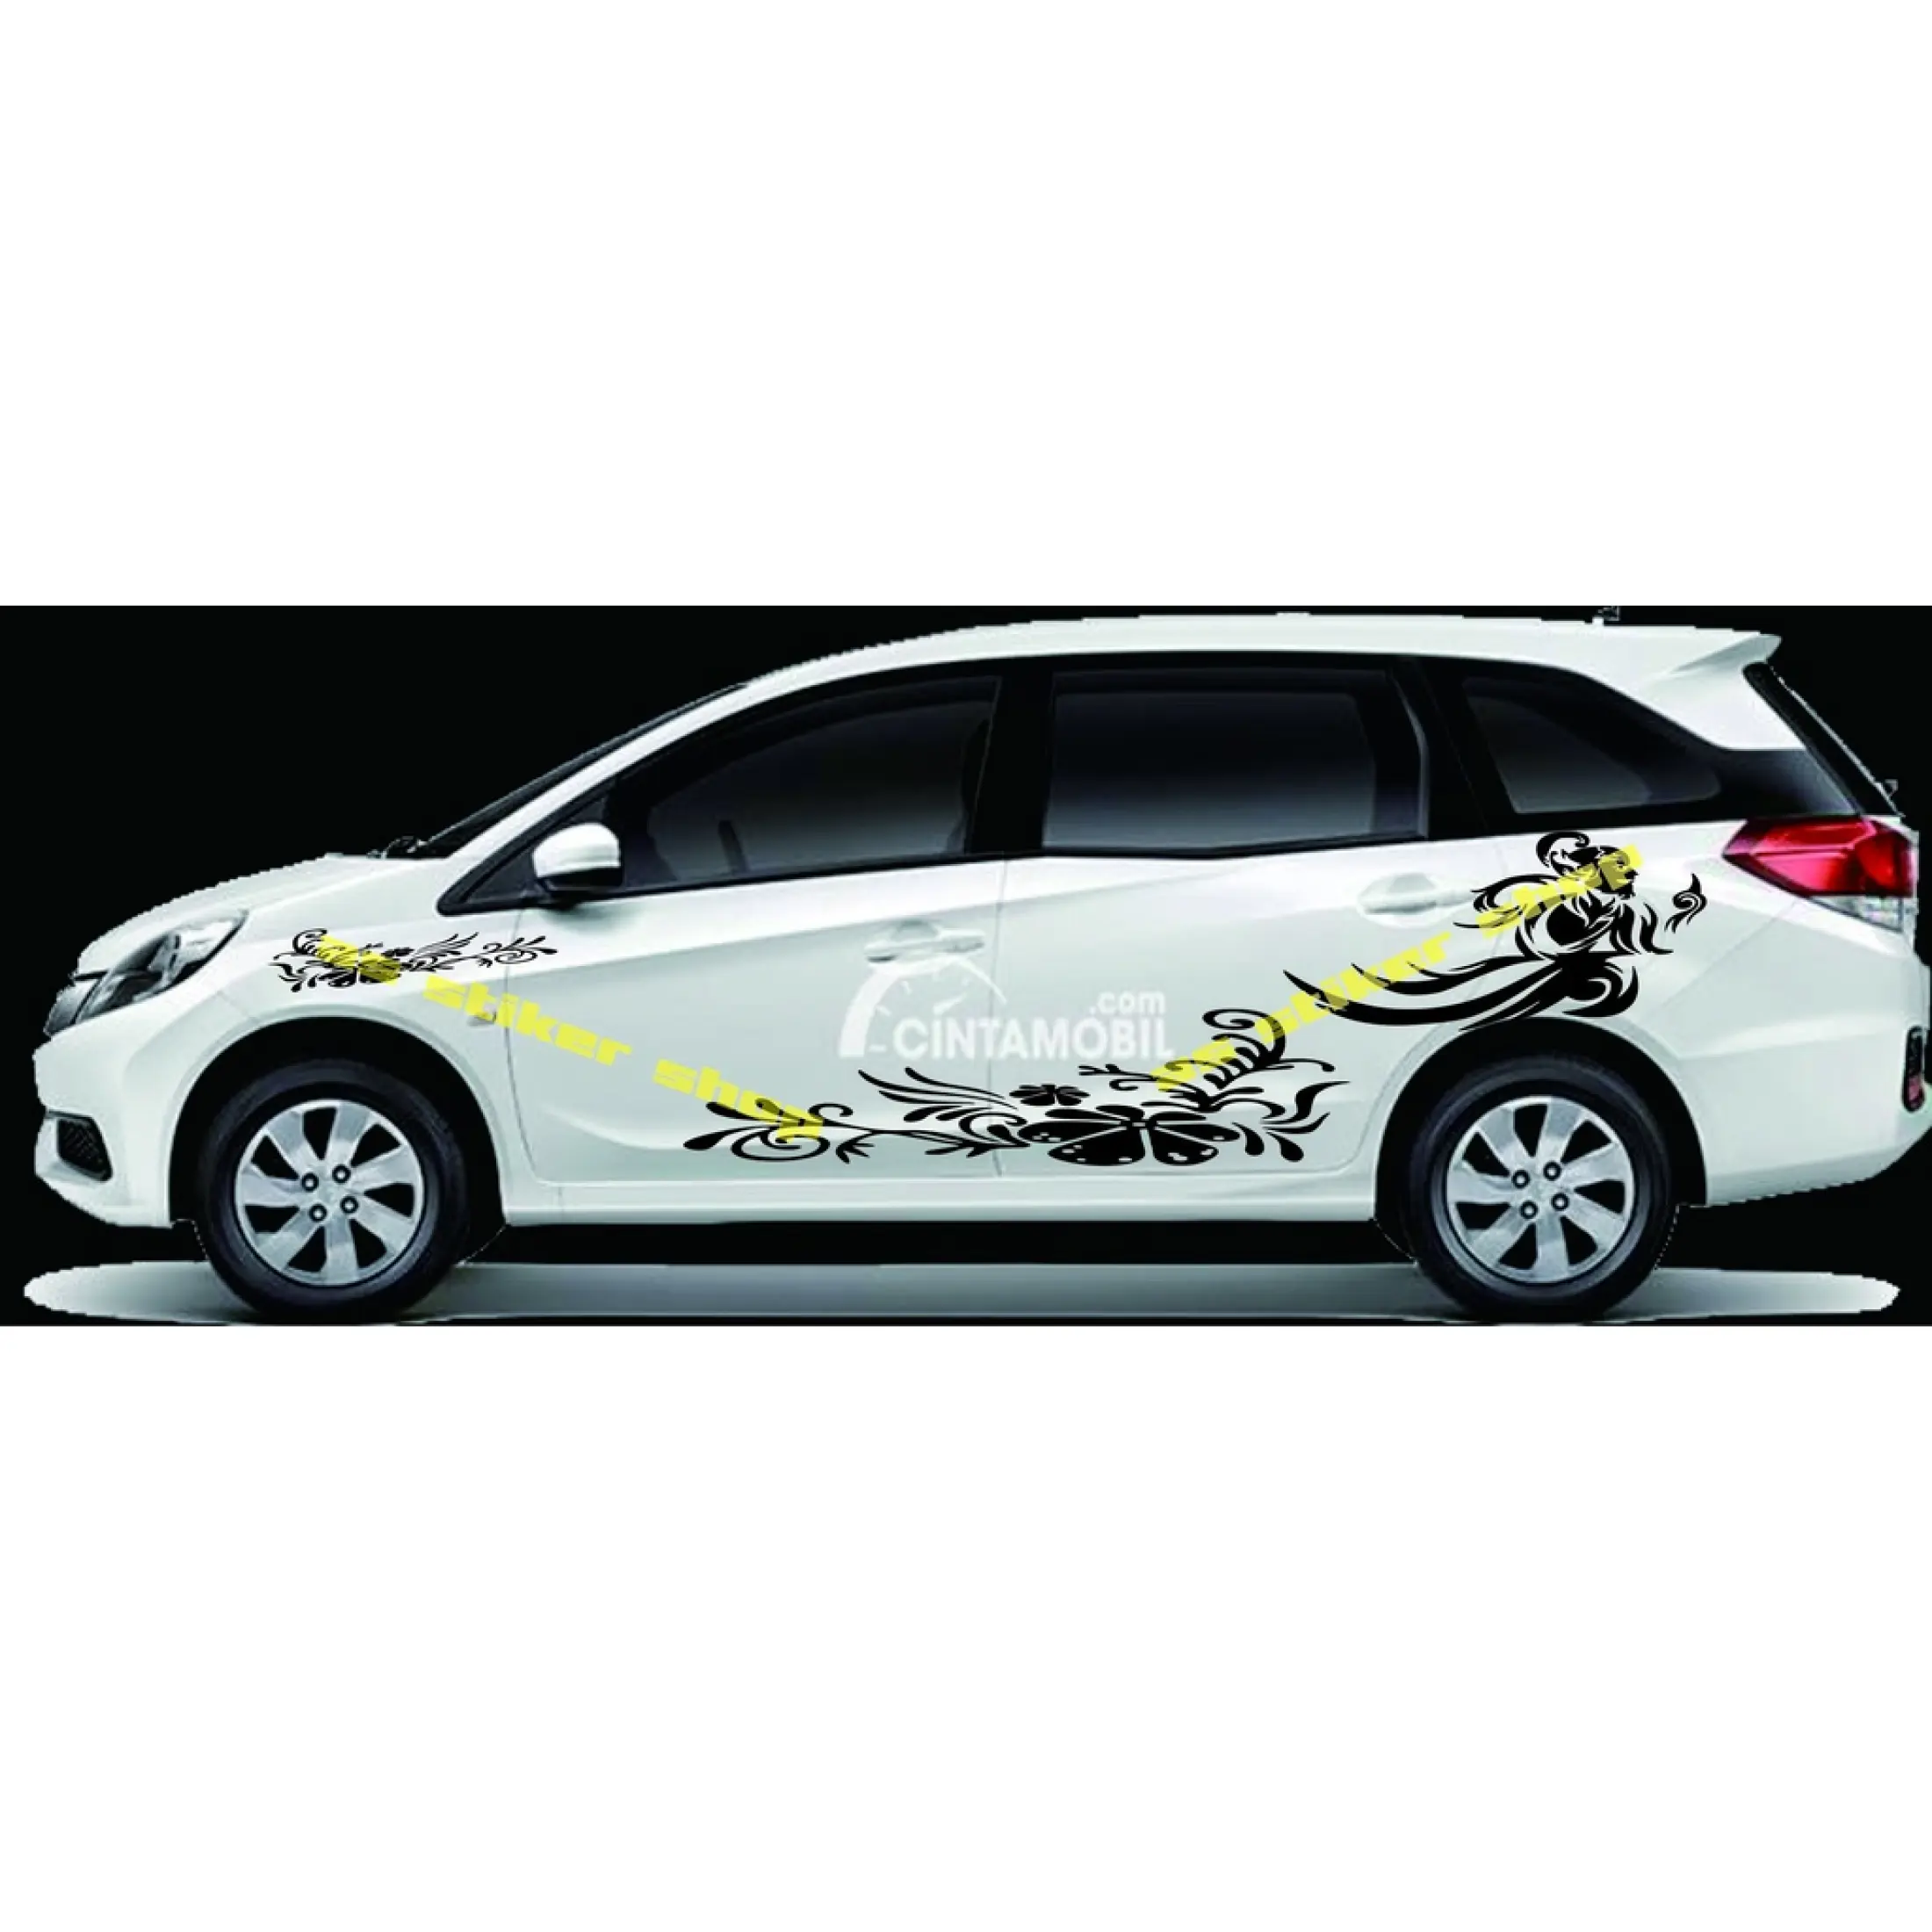 Terbaru Cutting Stiker Mobil Honda Mobilio Brio Jazz Avanza Xenia Sigra Calya Stiker Bunga Wayang Lazada Indonesia